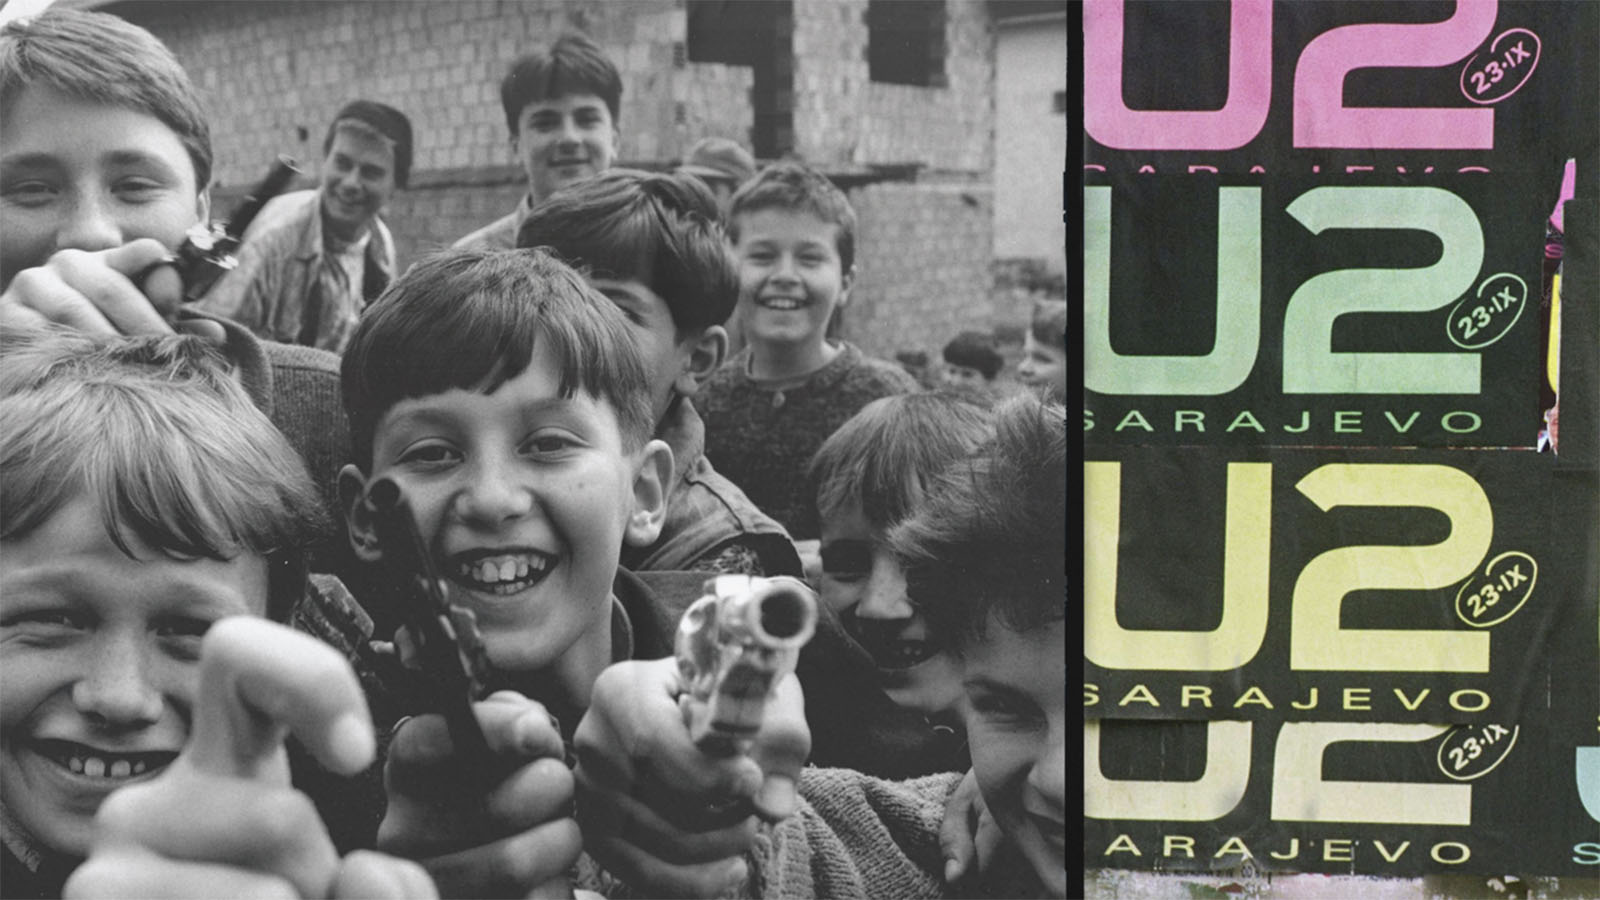 U2 helped bring attention to the Siege of Sarajevo.